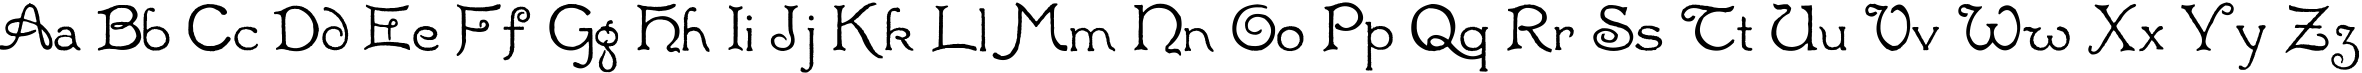 Пример написания английского алфавита шрифтом Radaern